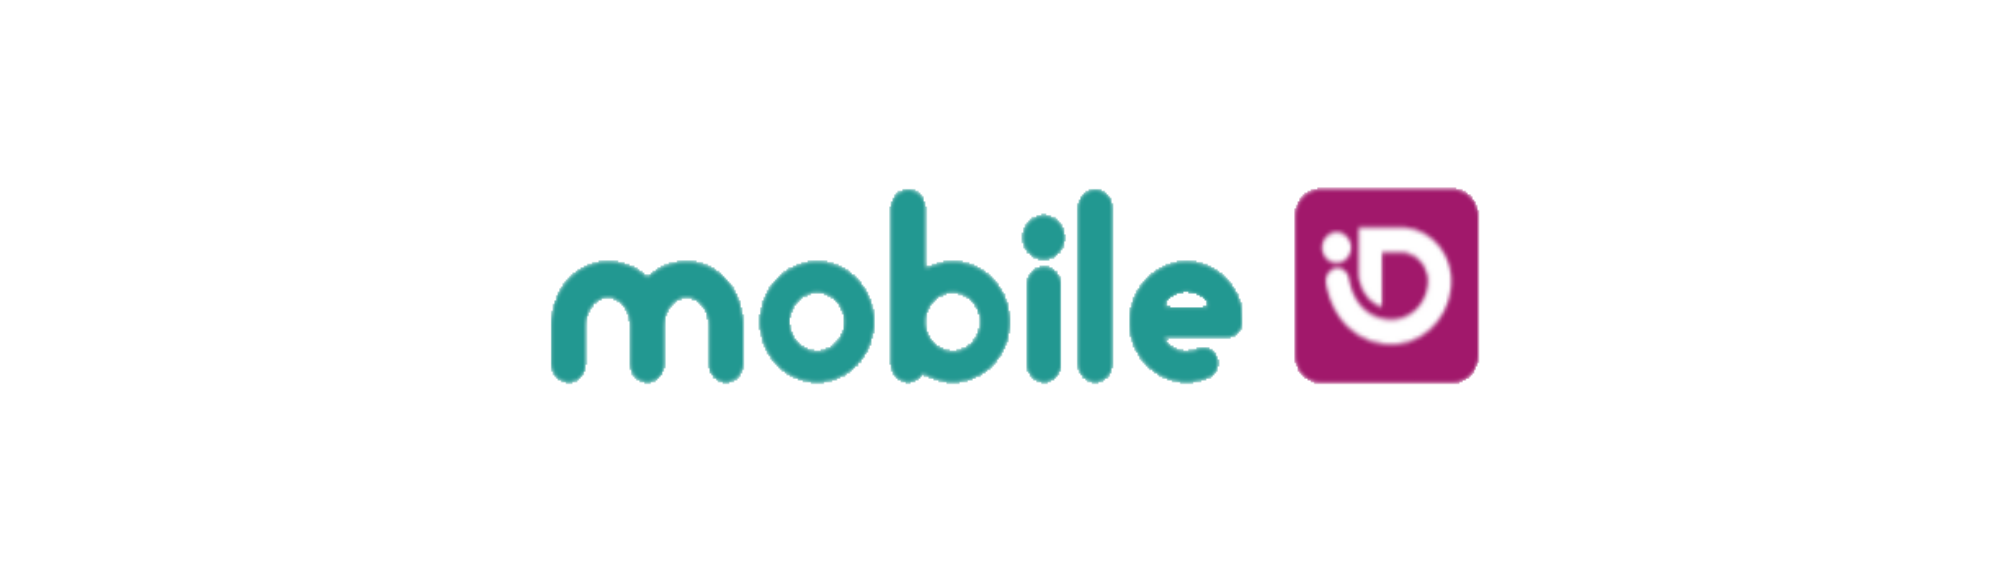 Mobile ID Logo